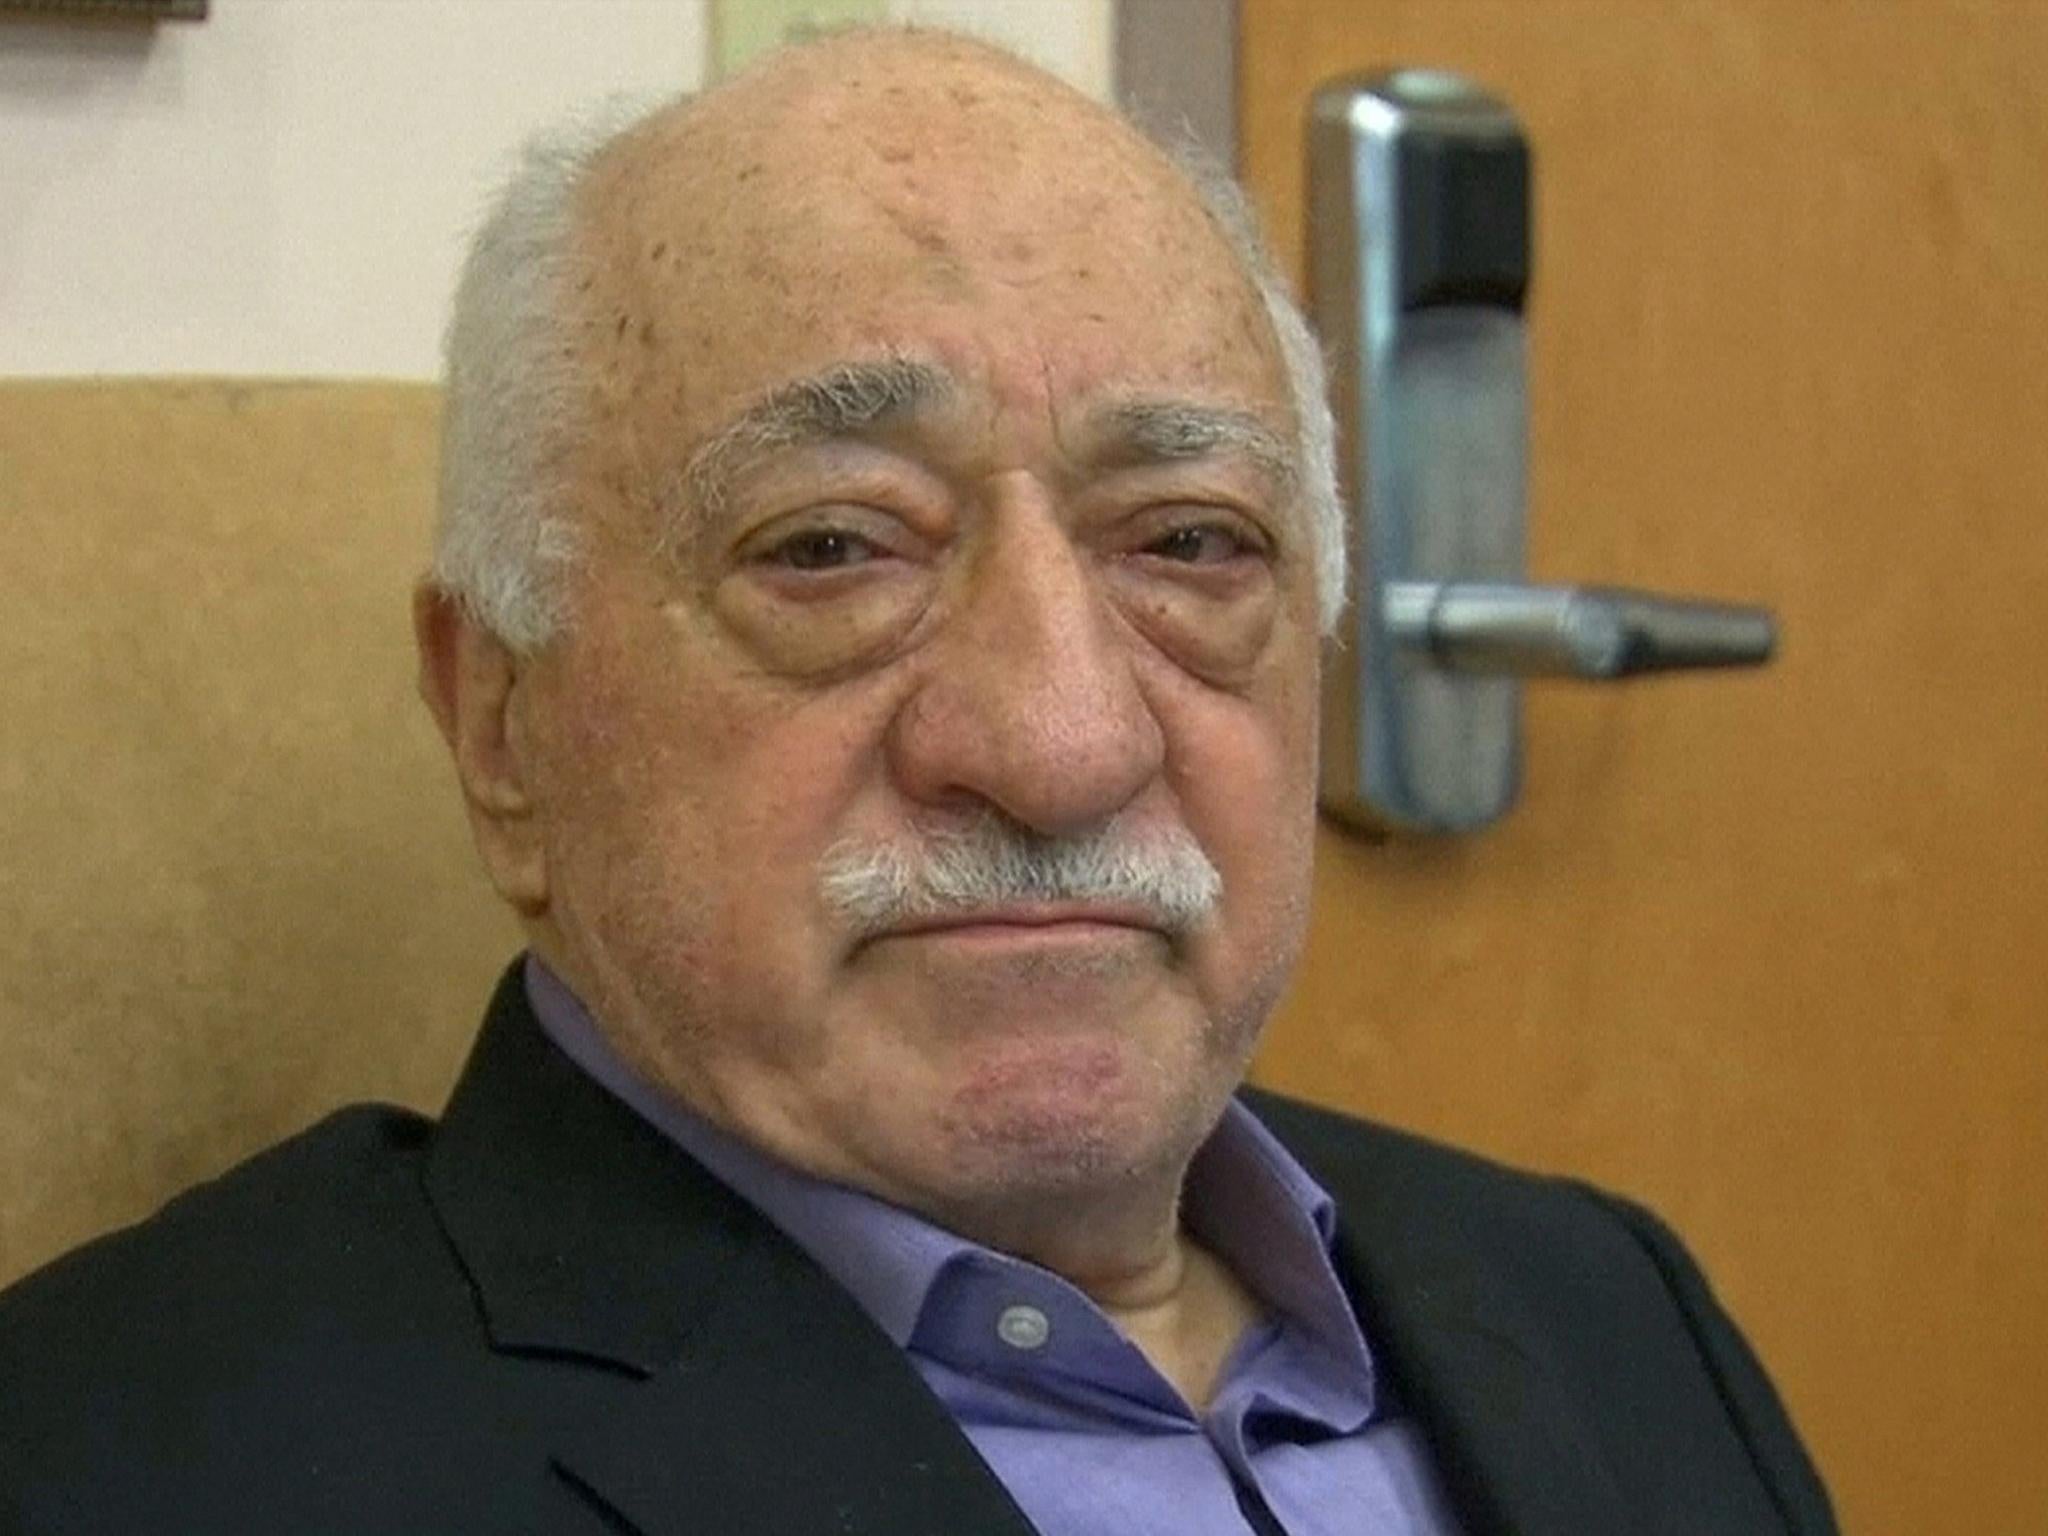 Fethullah Gulen speaking to journalists at his home in Saylorsburg, Pennsylvania last week